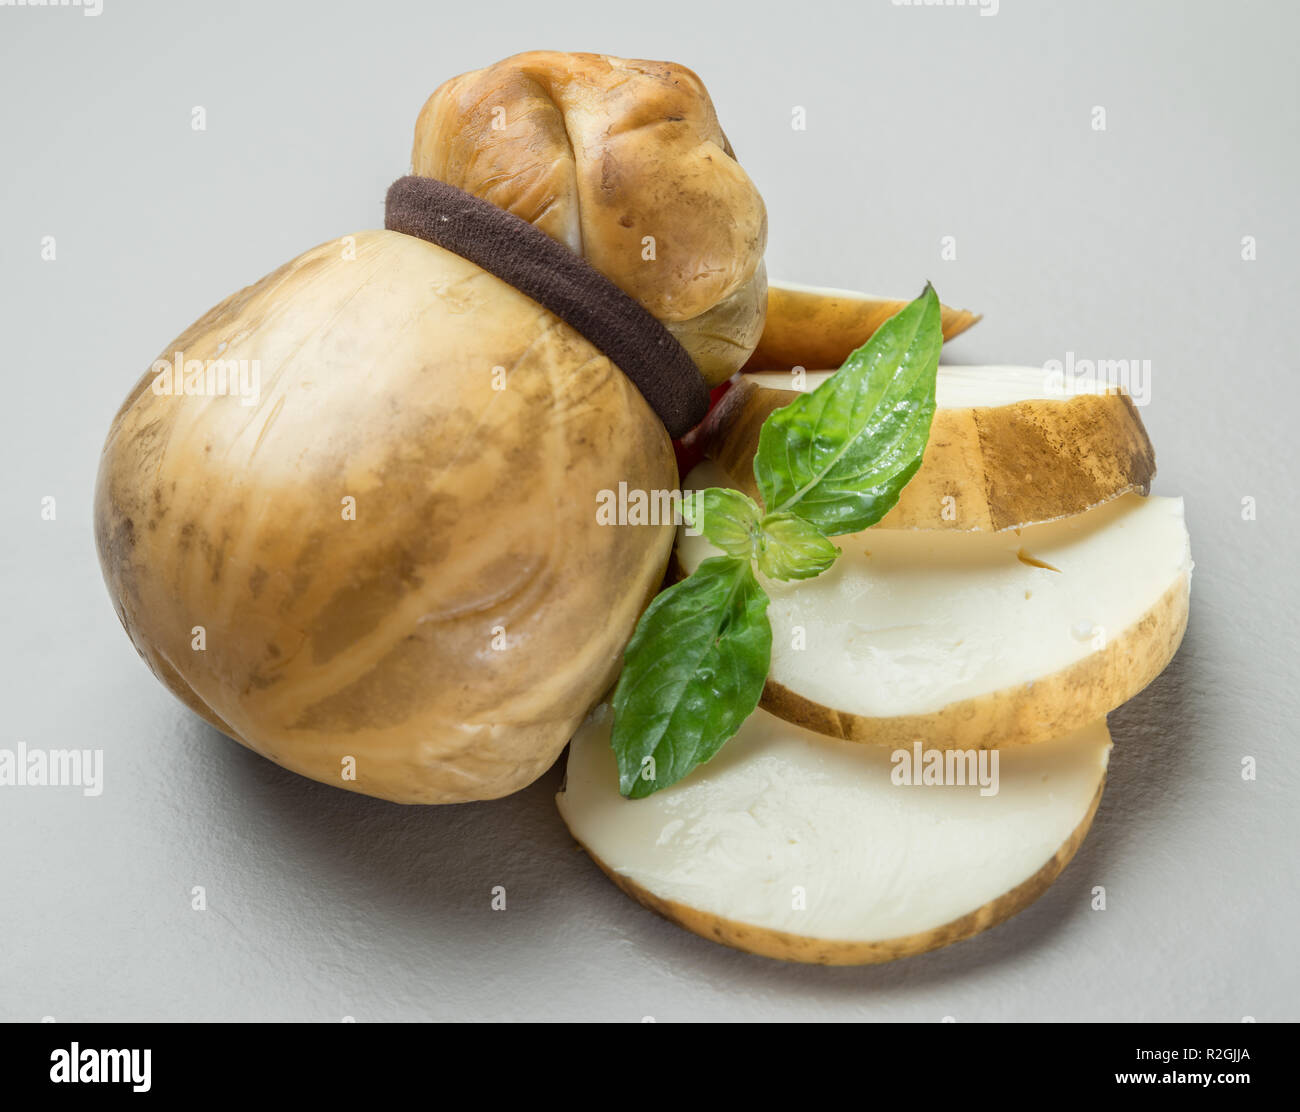 Traditionelle italienische geräuchert Scamorza Käse mit Kräutern auf grauem  Hintergrund Stockfotografie - Alamy | Italiamo, ab 25.01.